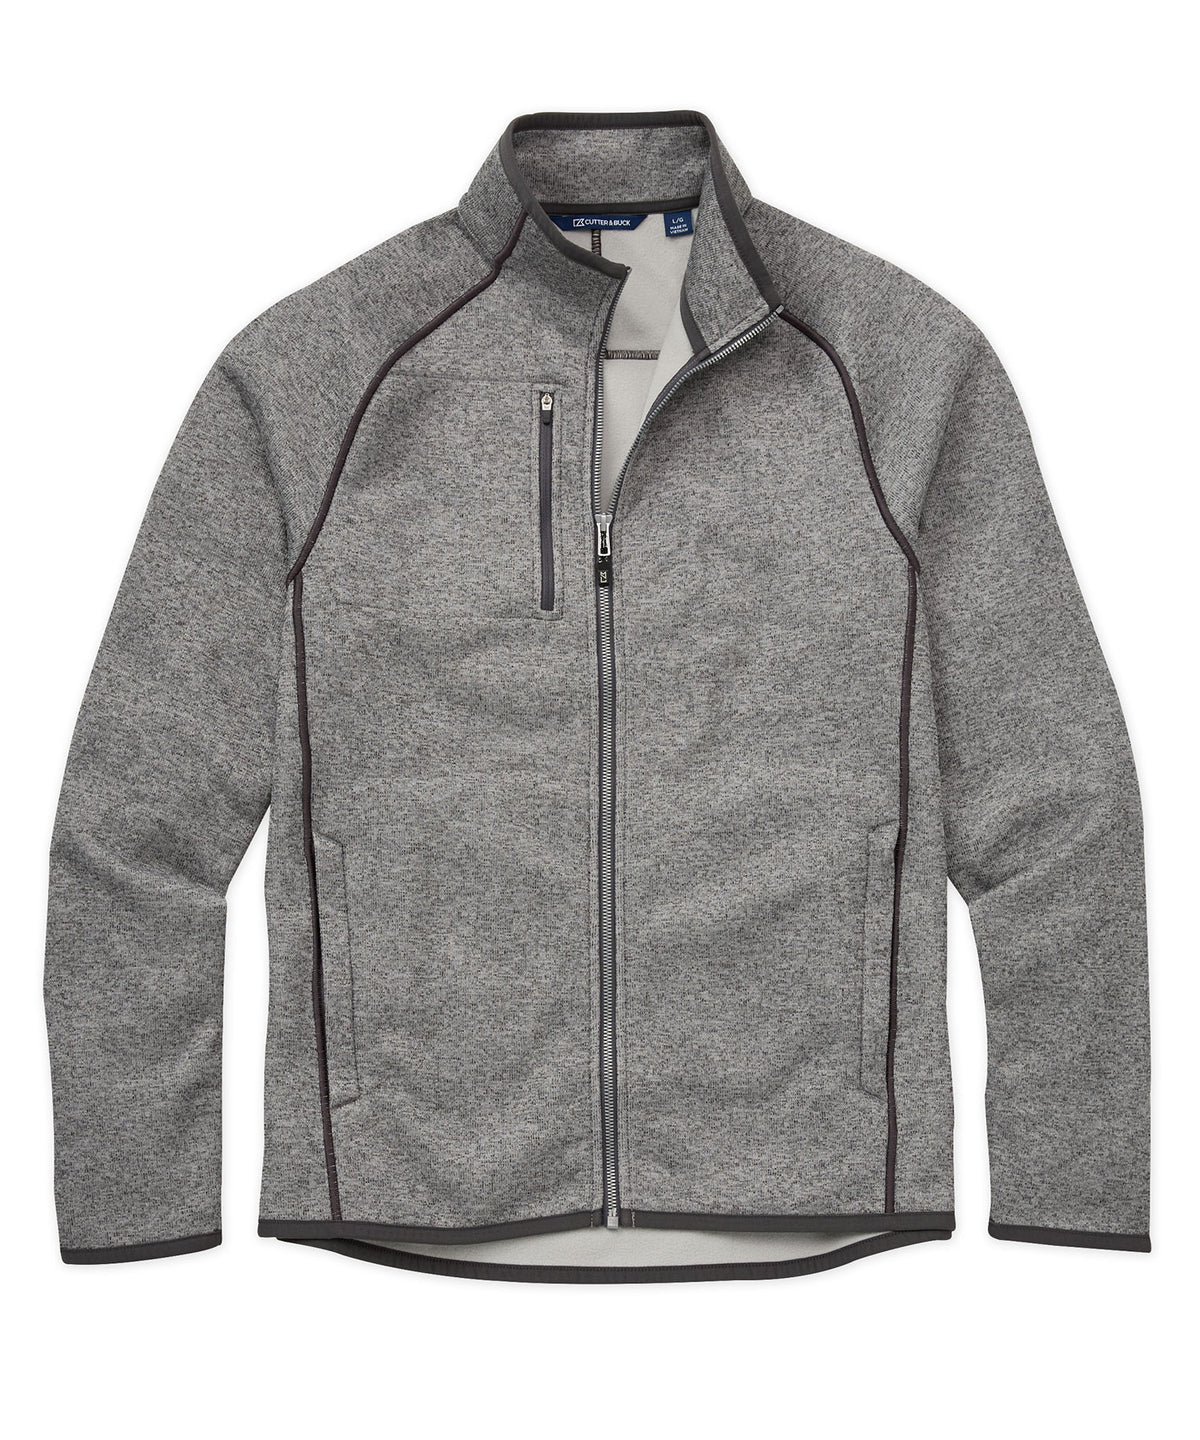 Cutter & Buck Mainsail Sweater-Knit Full Zip Jacket, Big & Tall